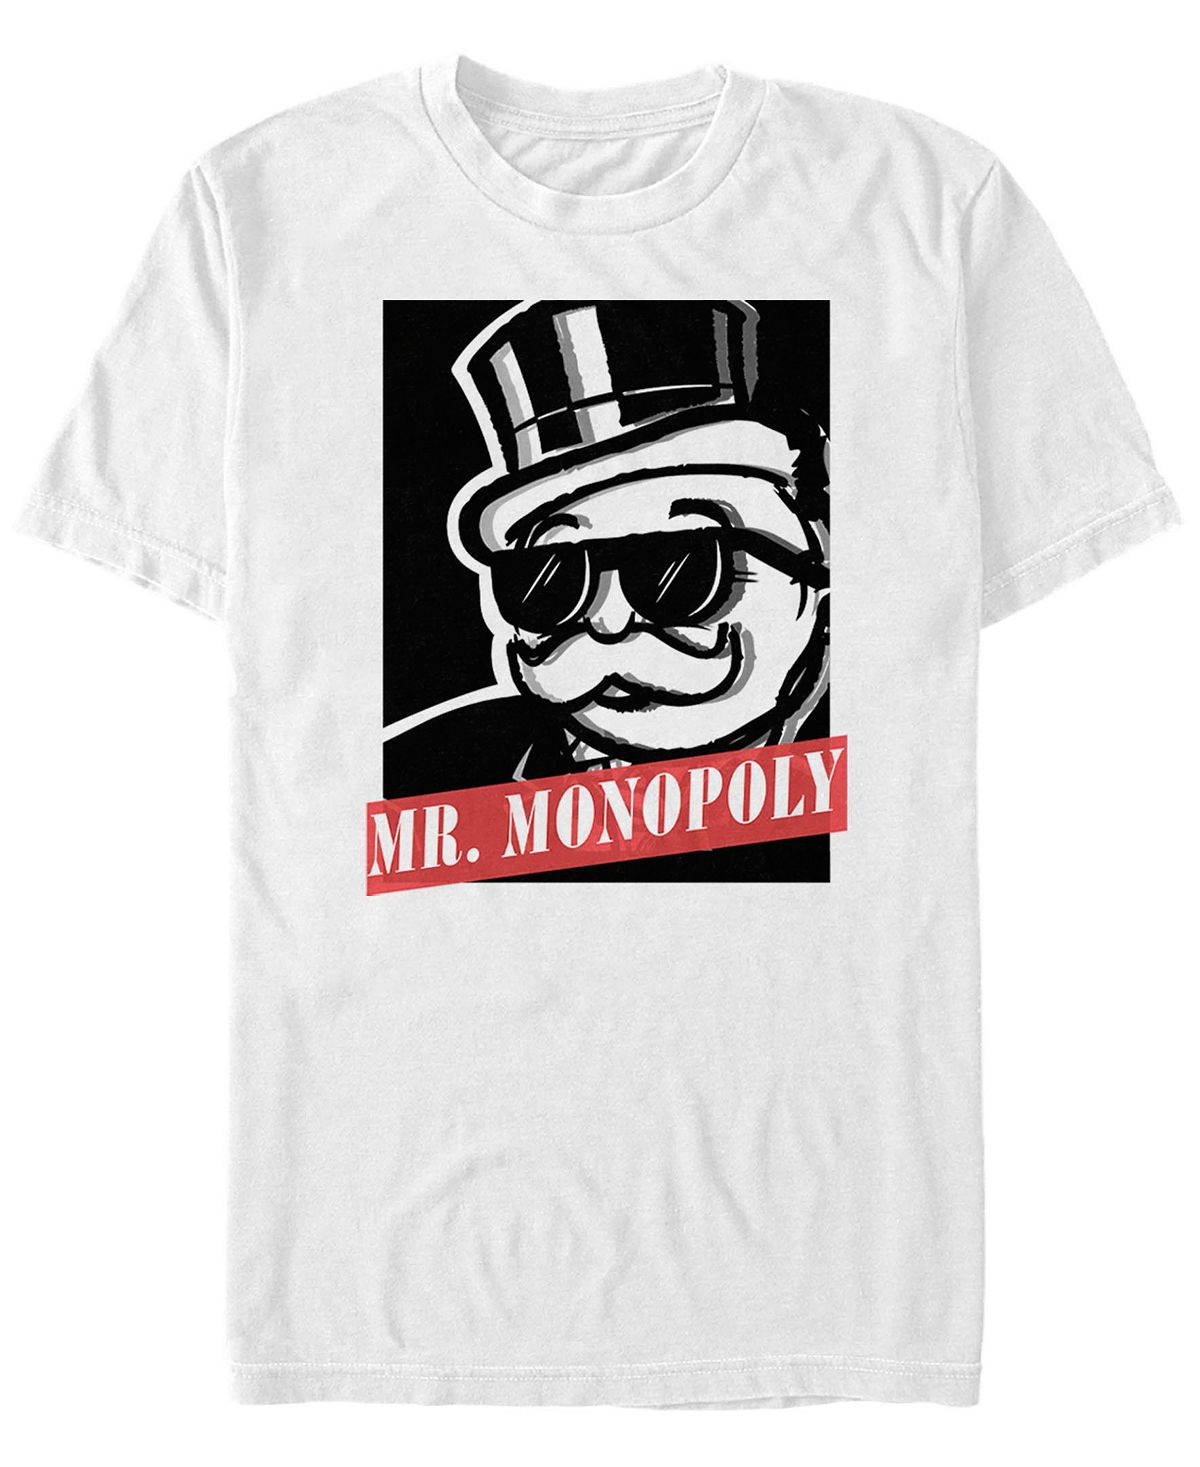 Мужская футболка с коротким рукавом mr monopoly с графическим плакатом Fifth Sun, белый